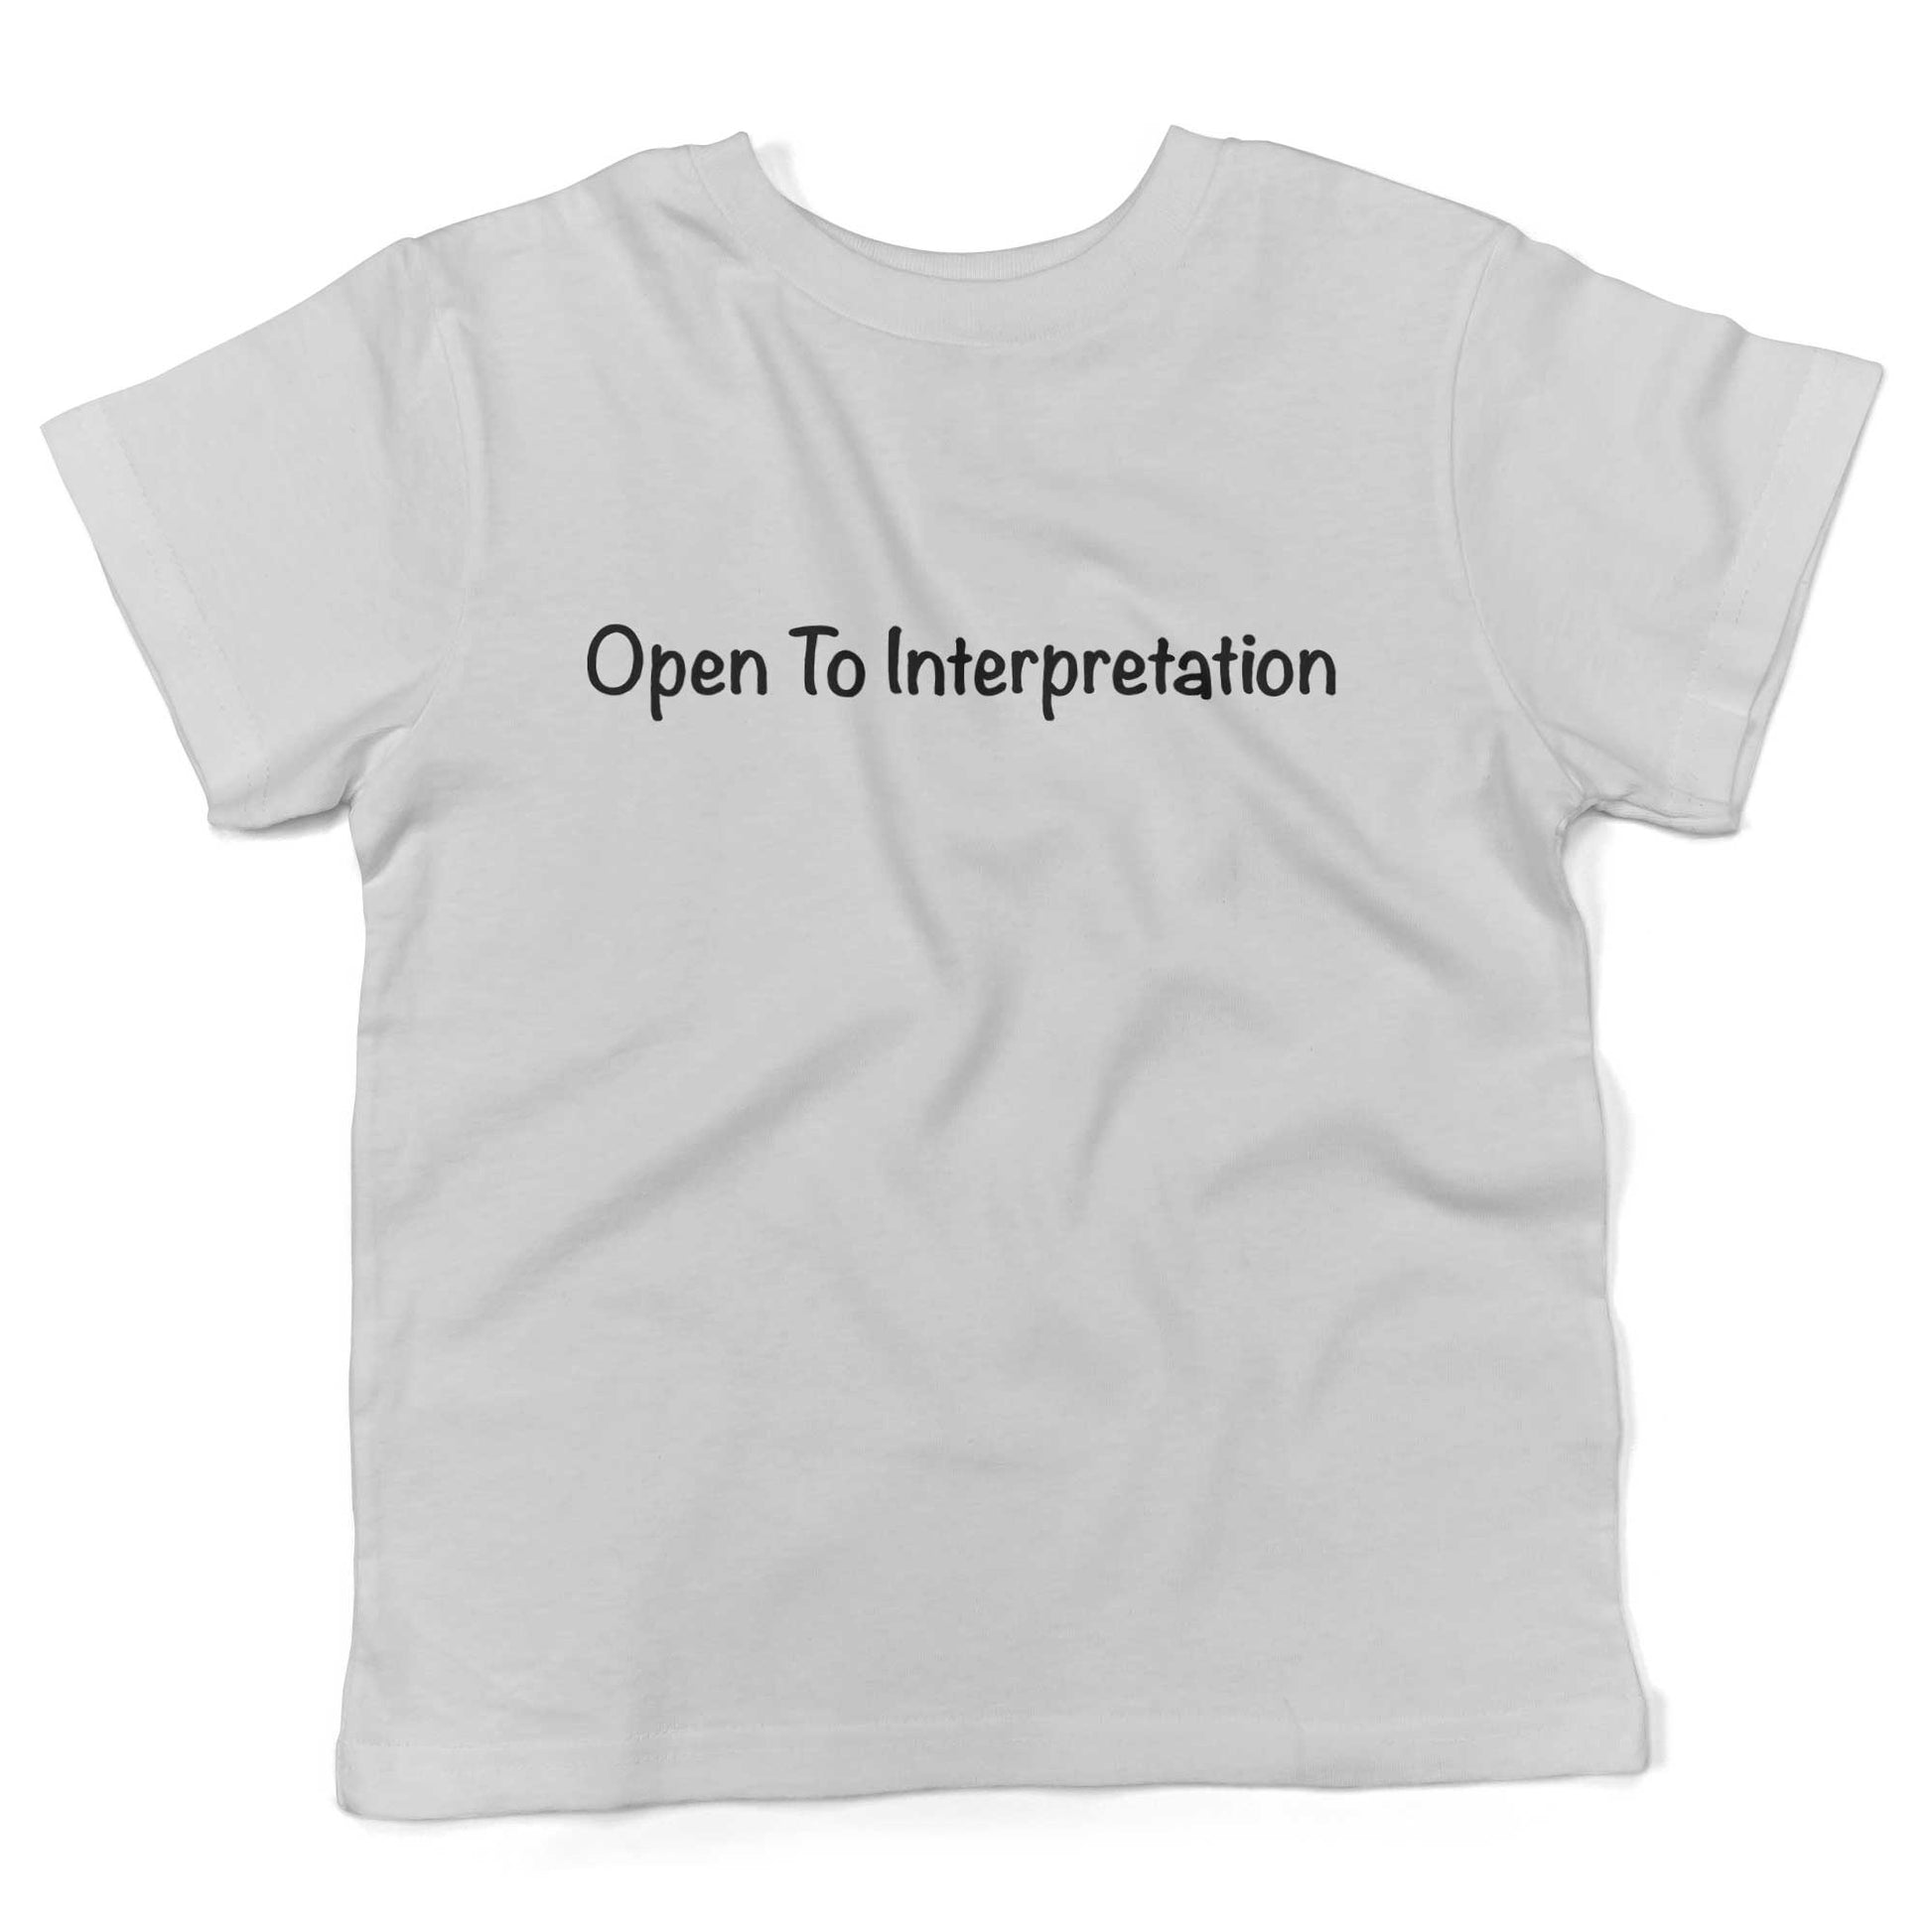 Open To Interpretation Toddler Shirt-White-2T